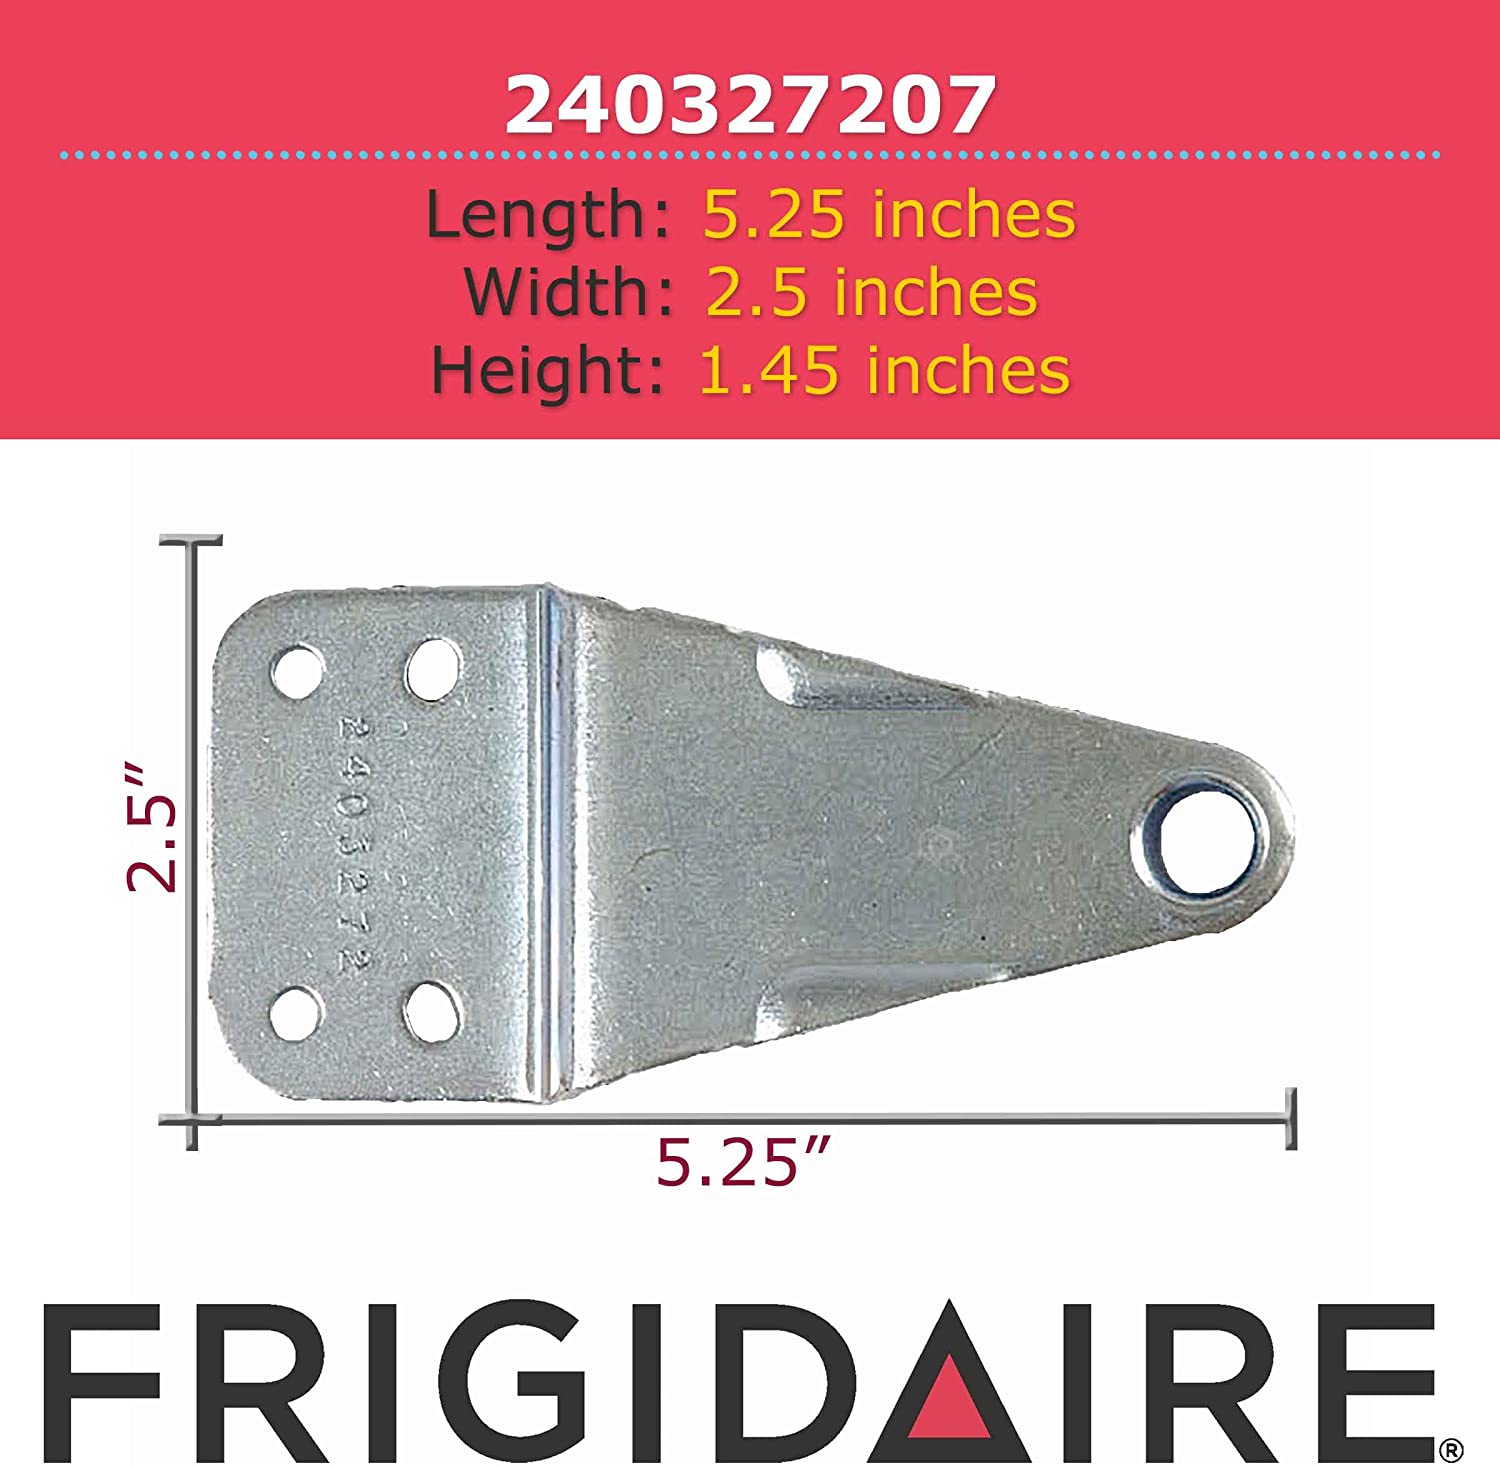 Genuine Frigidaire 240327207 Refrigerator Top Hinge - image 3 of 3